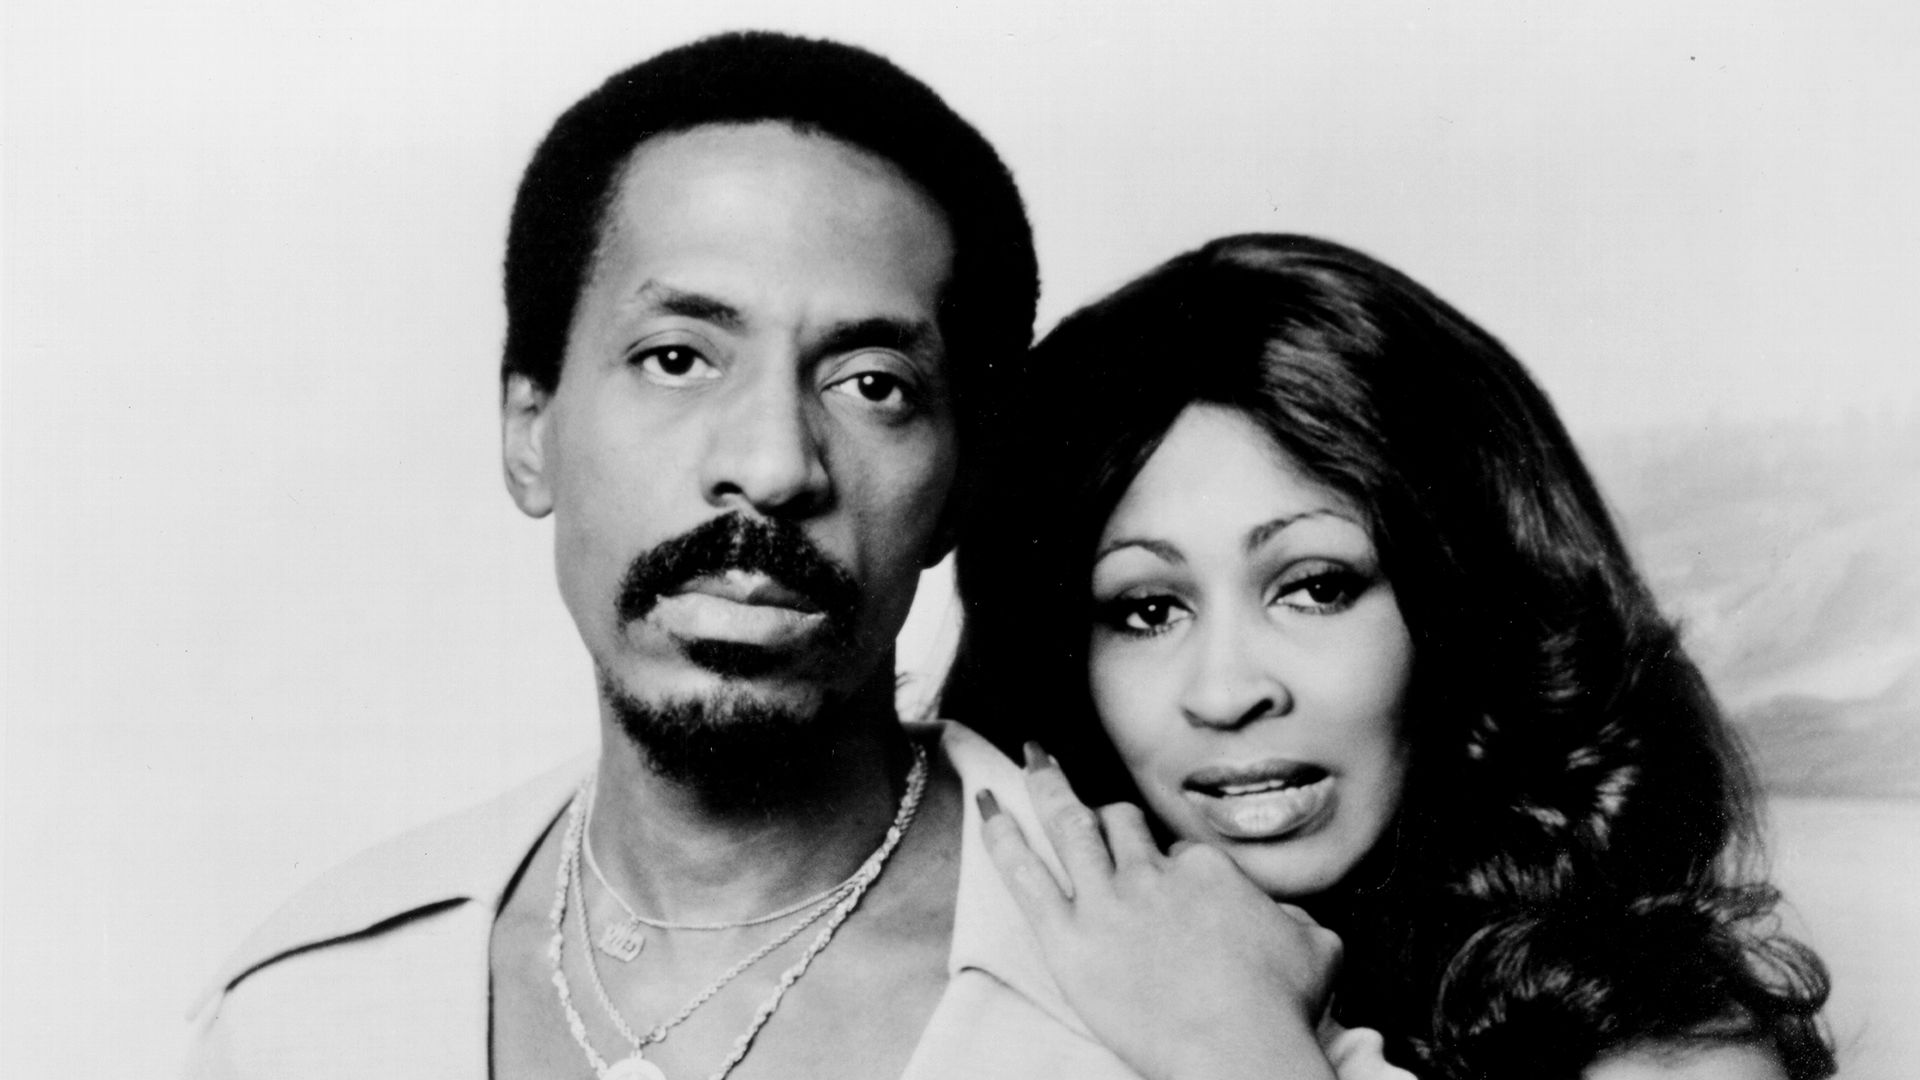 Ike & Tina Turner in 1972